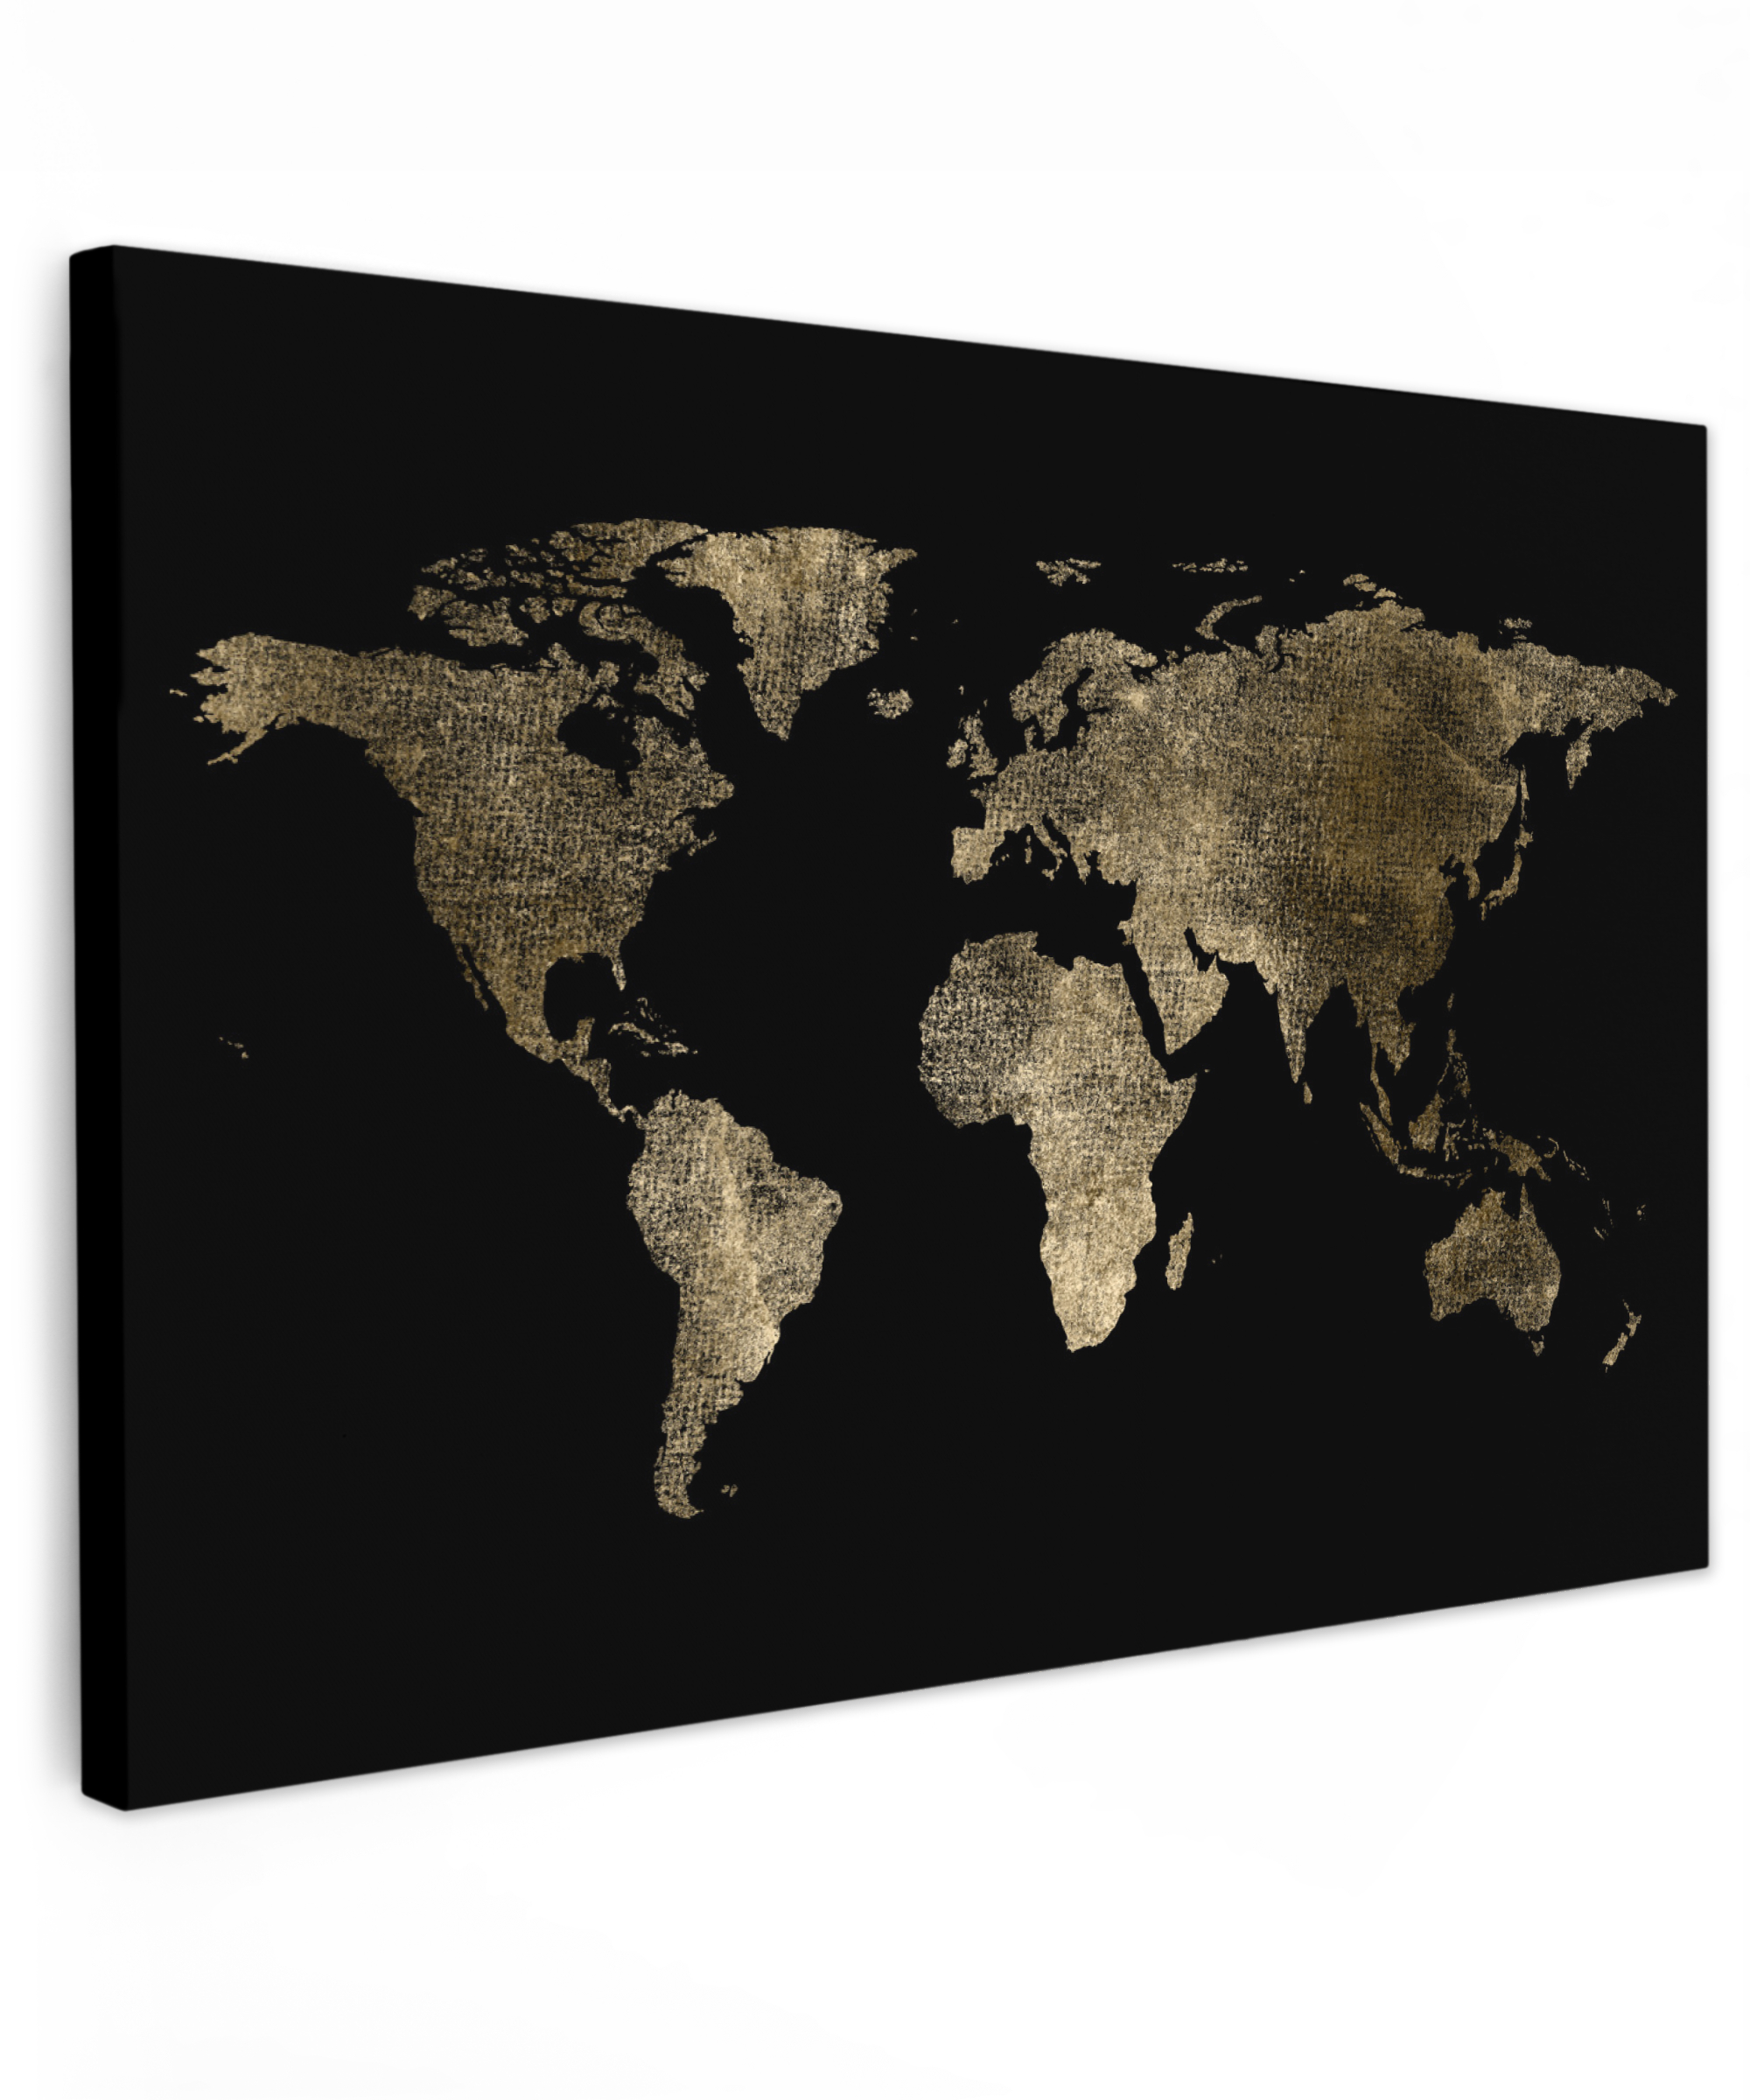 Leinwandbild - Weltkarte - Gold - Schwarz